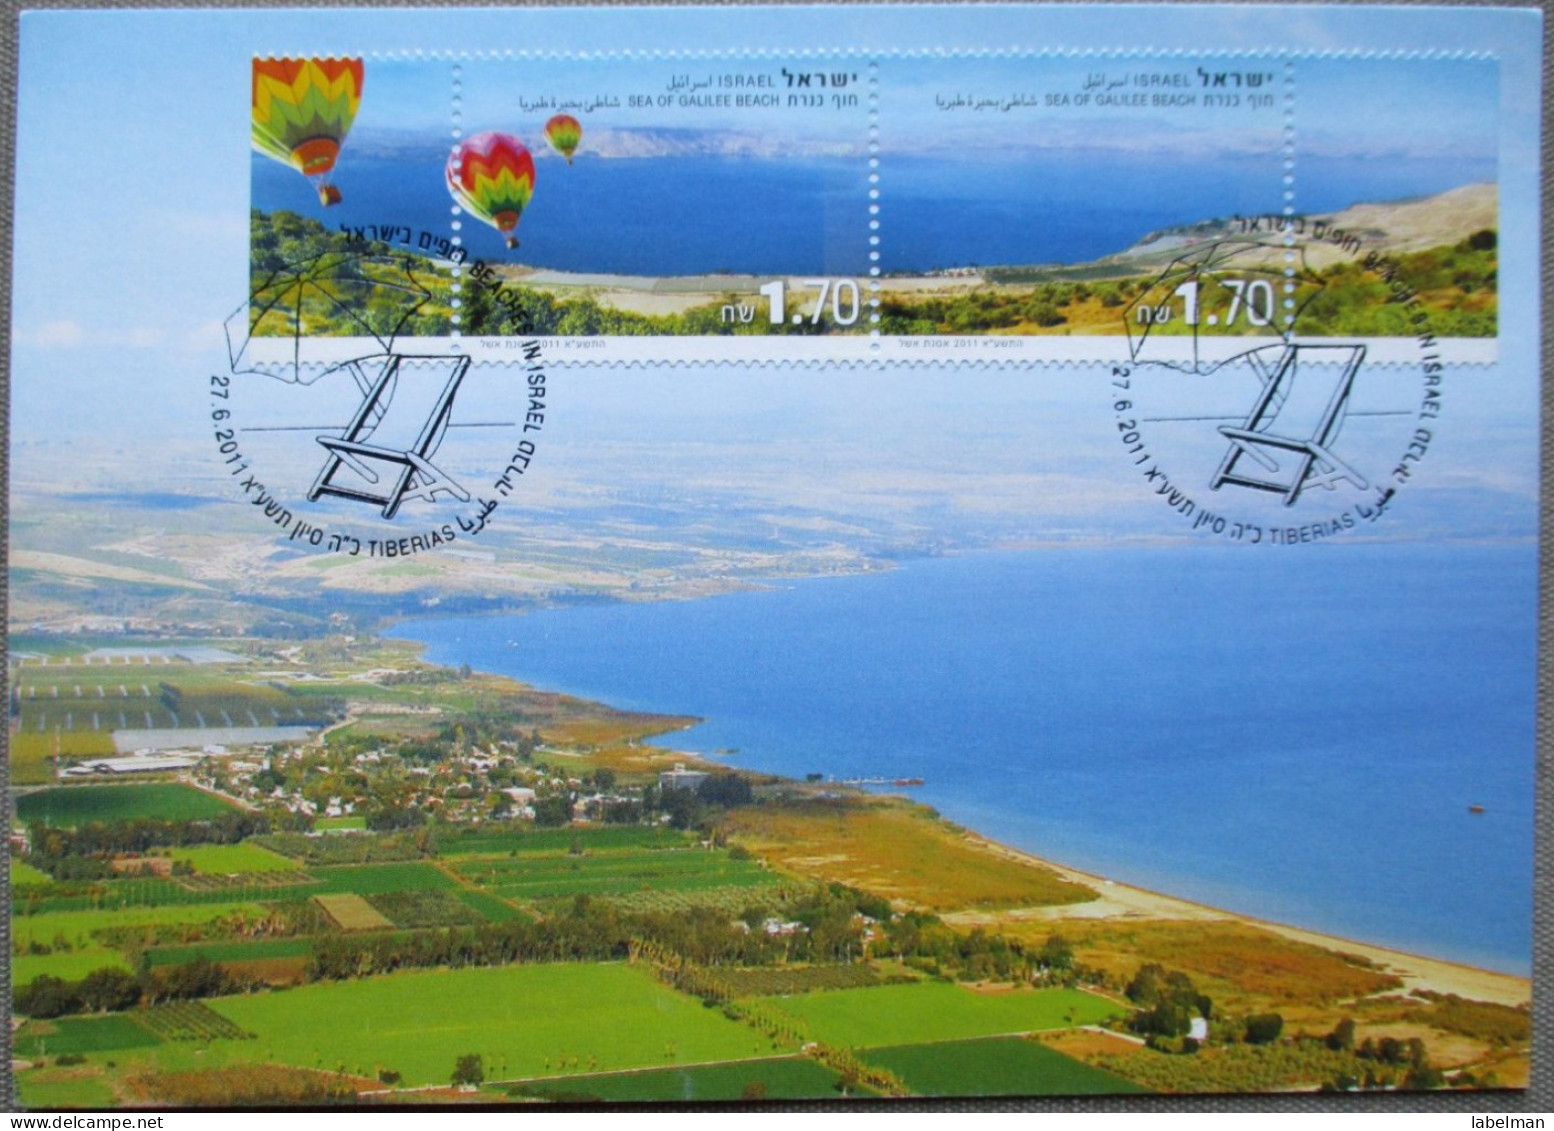 ISRAEL 2011 MAXIMUM CARD POSTCARD TIBERIAS GALILEE SEA FIRST DAY OF ISSUE CARTOLINA CARTE POSTALE POSTKARTE CARTOLINA - Maximumkarten